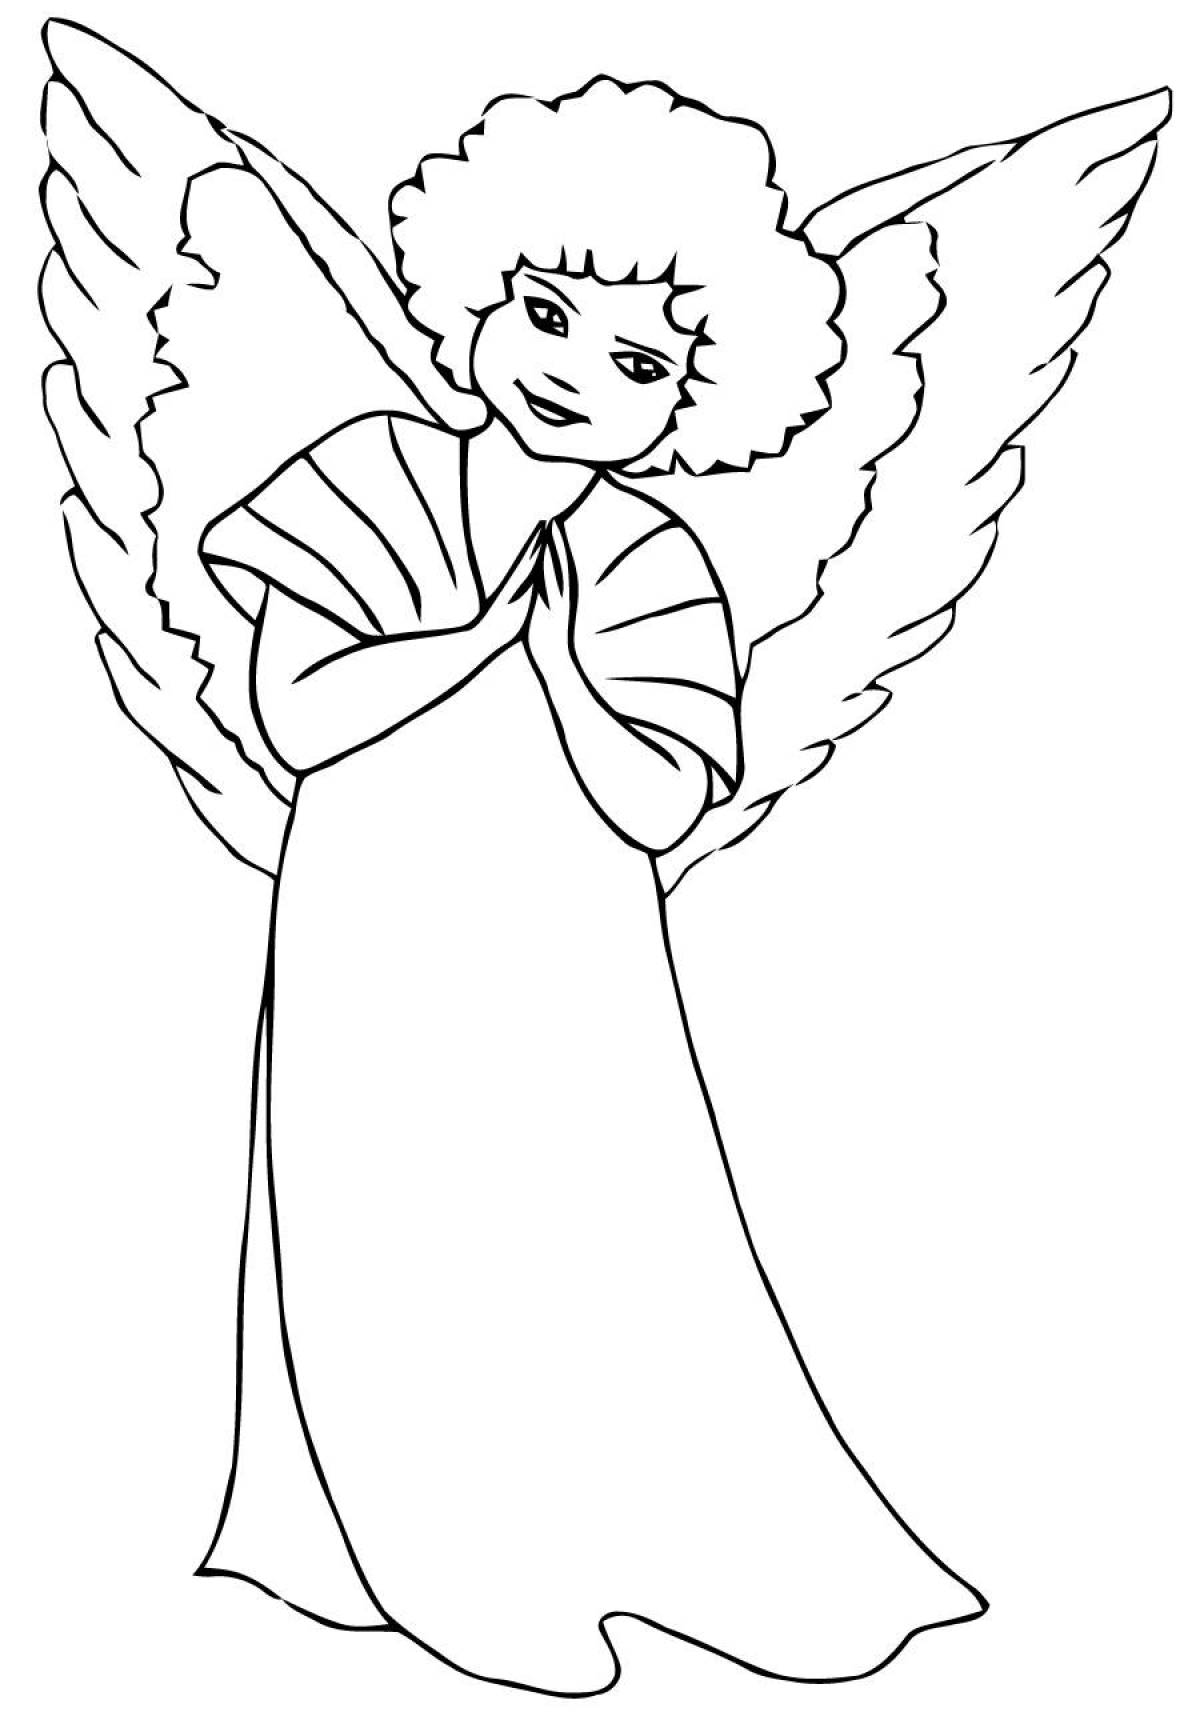 Изысканная раскраска ангел с крыльями для детей